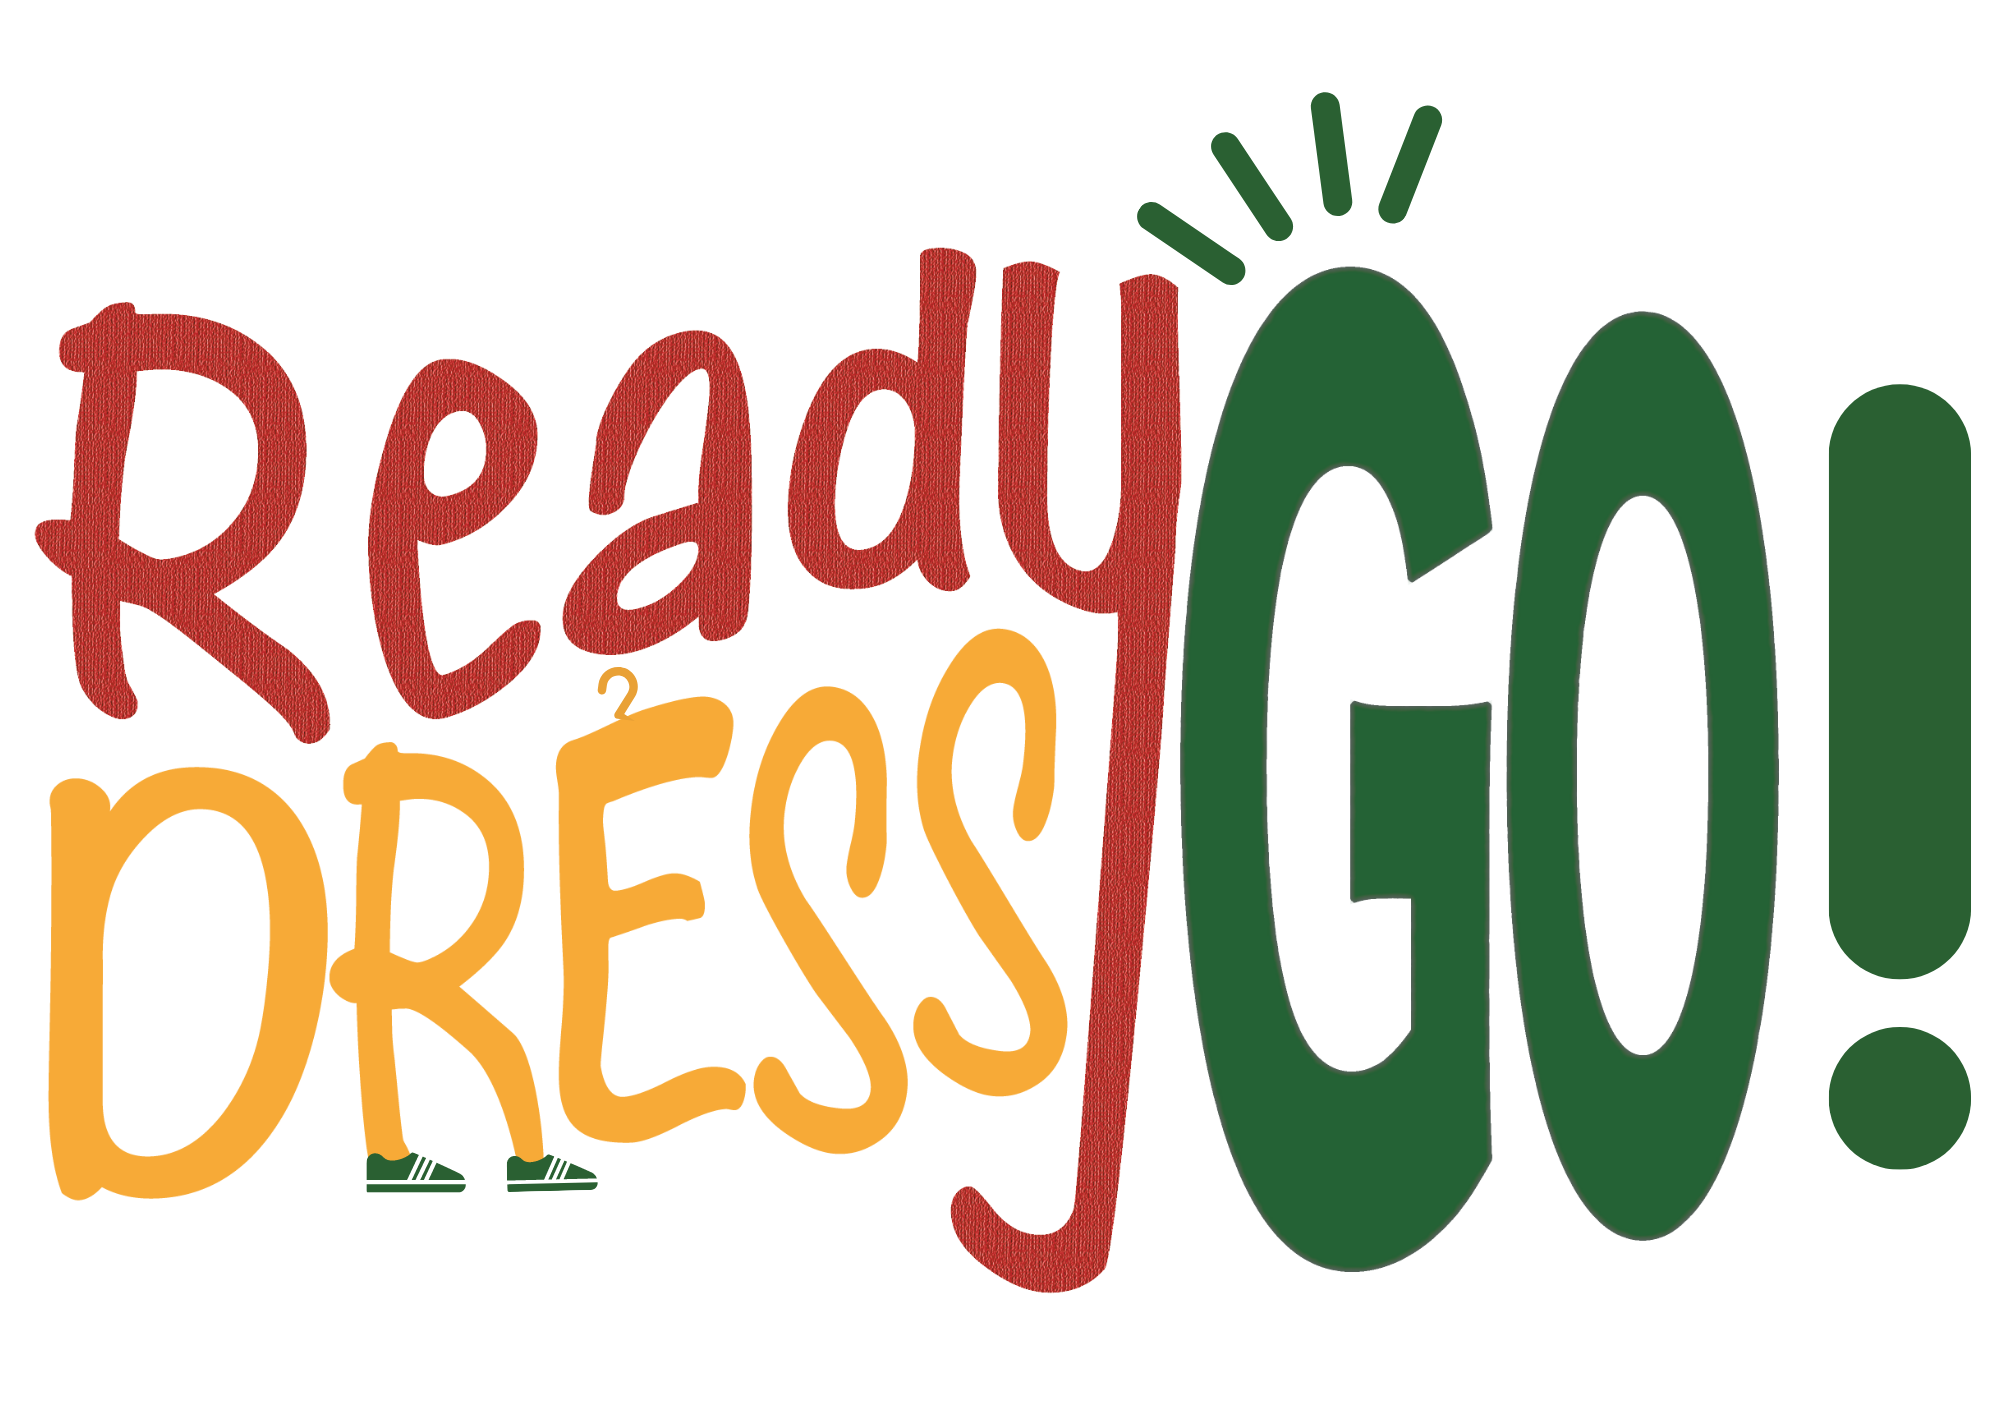 image of ready dress go logo